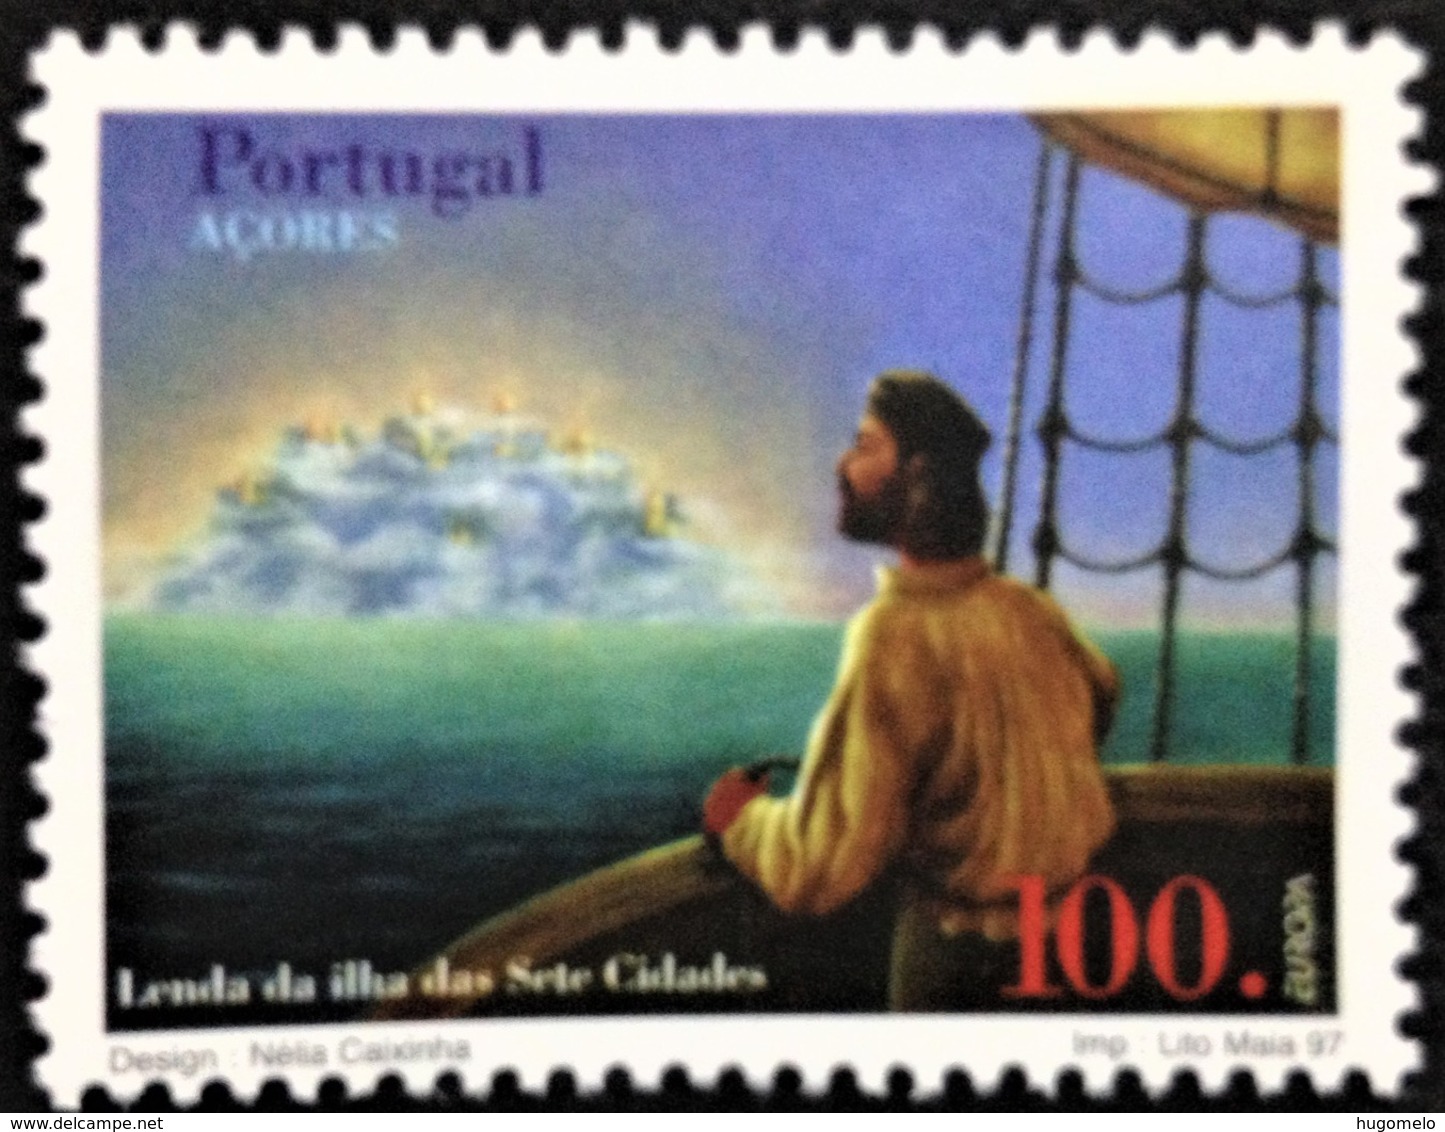 Portugal, AZORES, Mint Stamp, "Europa Cept", "Legends", "Lendas", 1997 - Collections